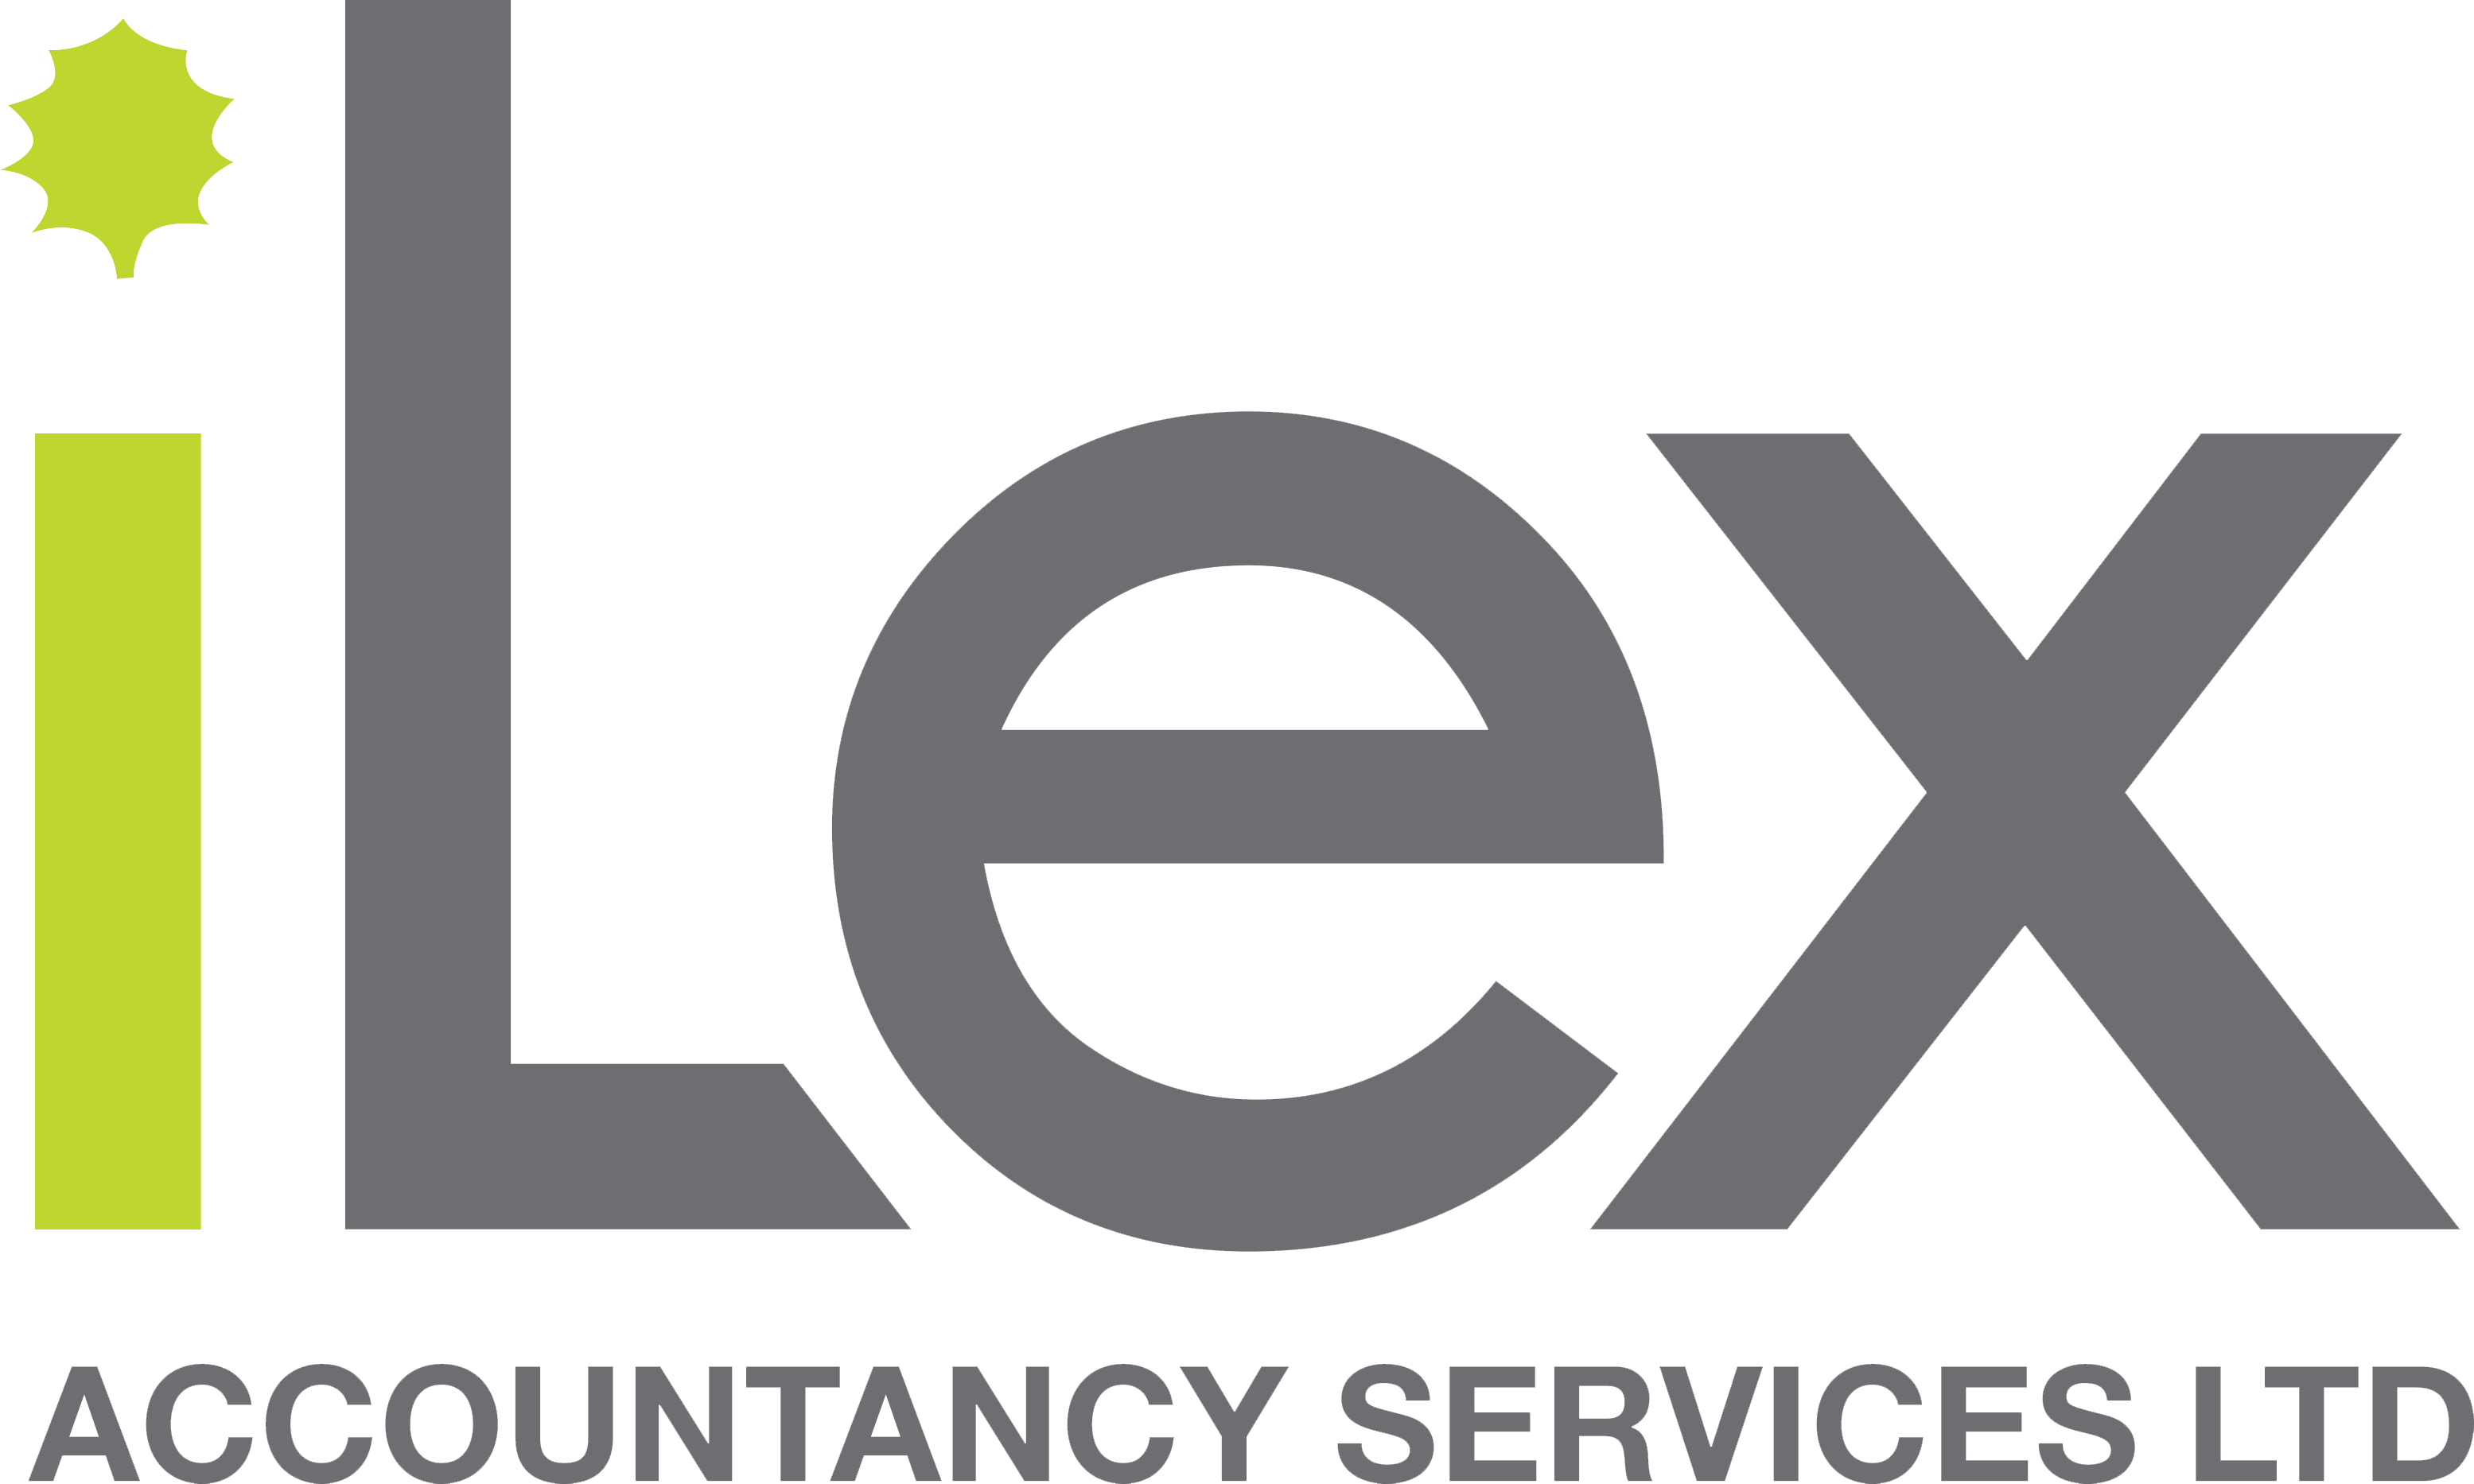 iLex Accountancy Services